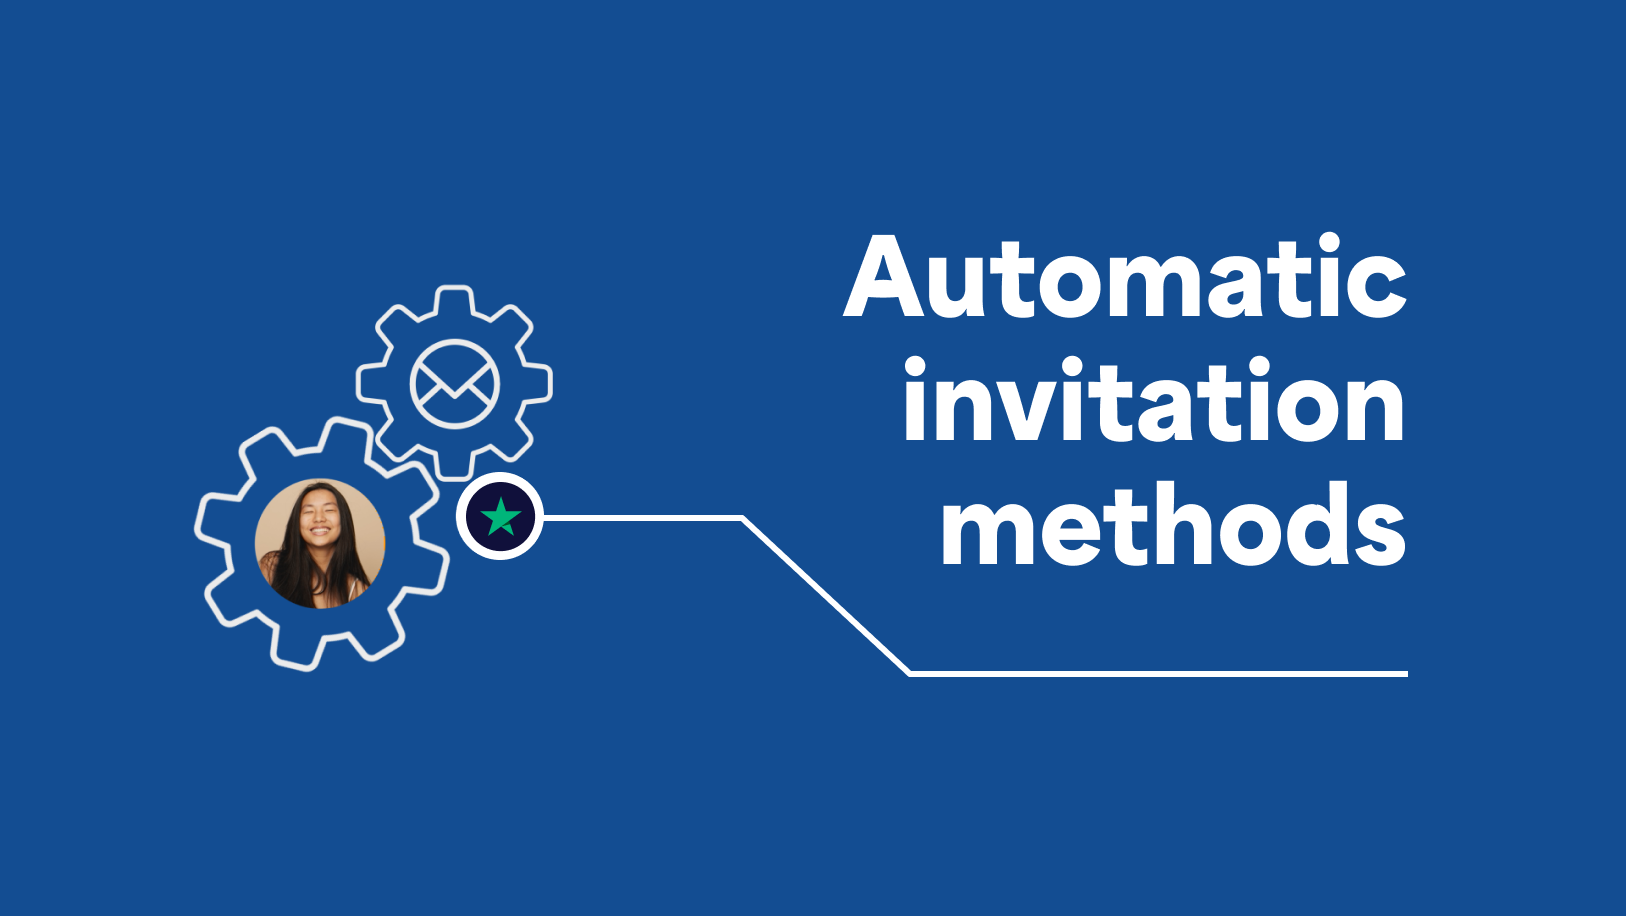 Automatic invitation methods